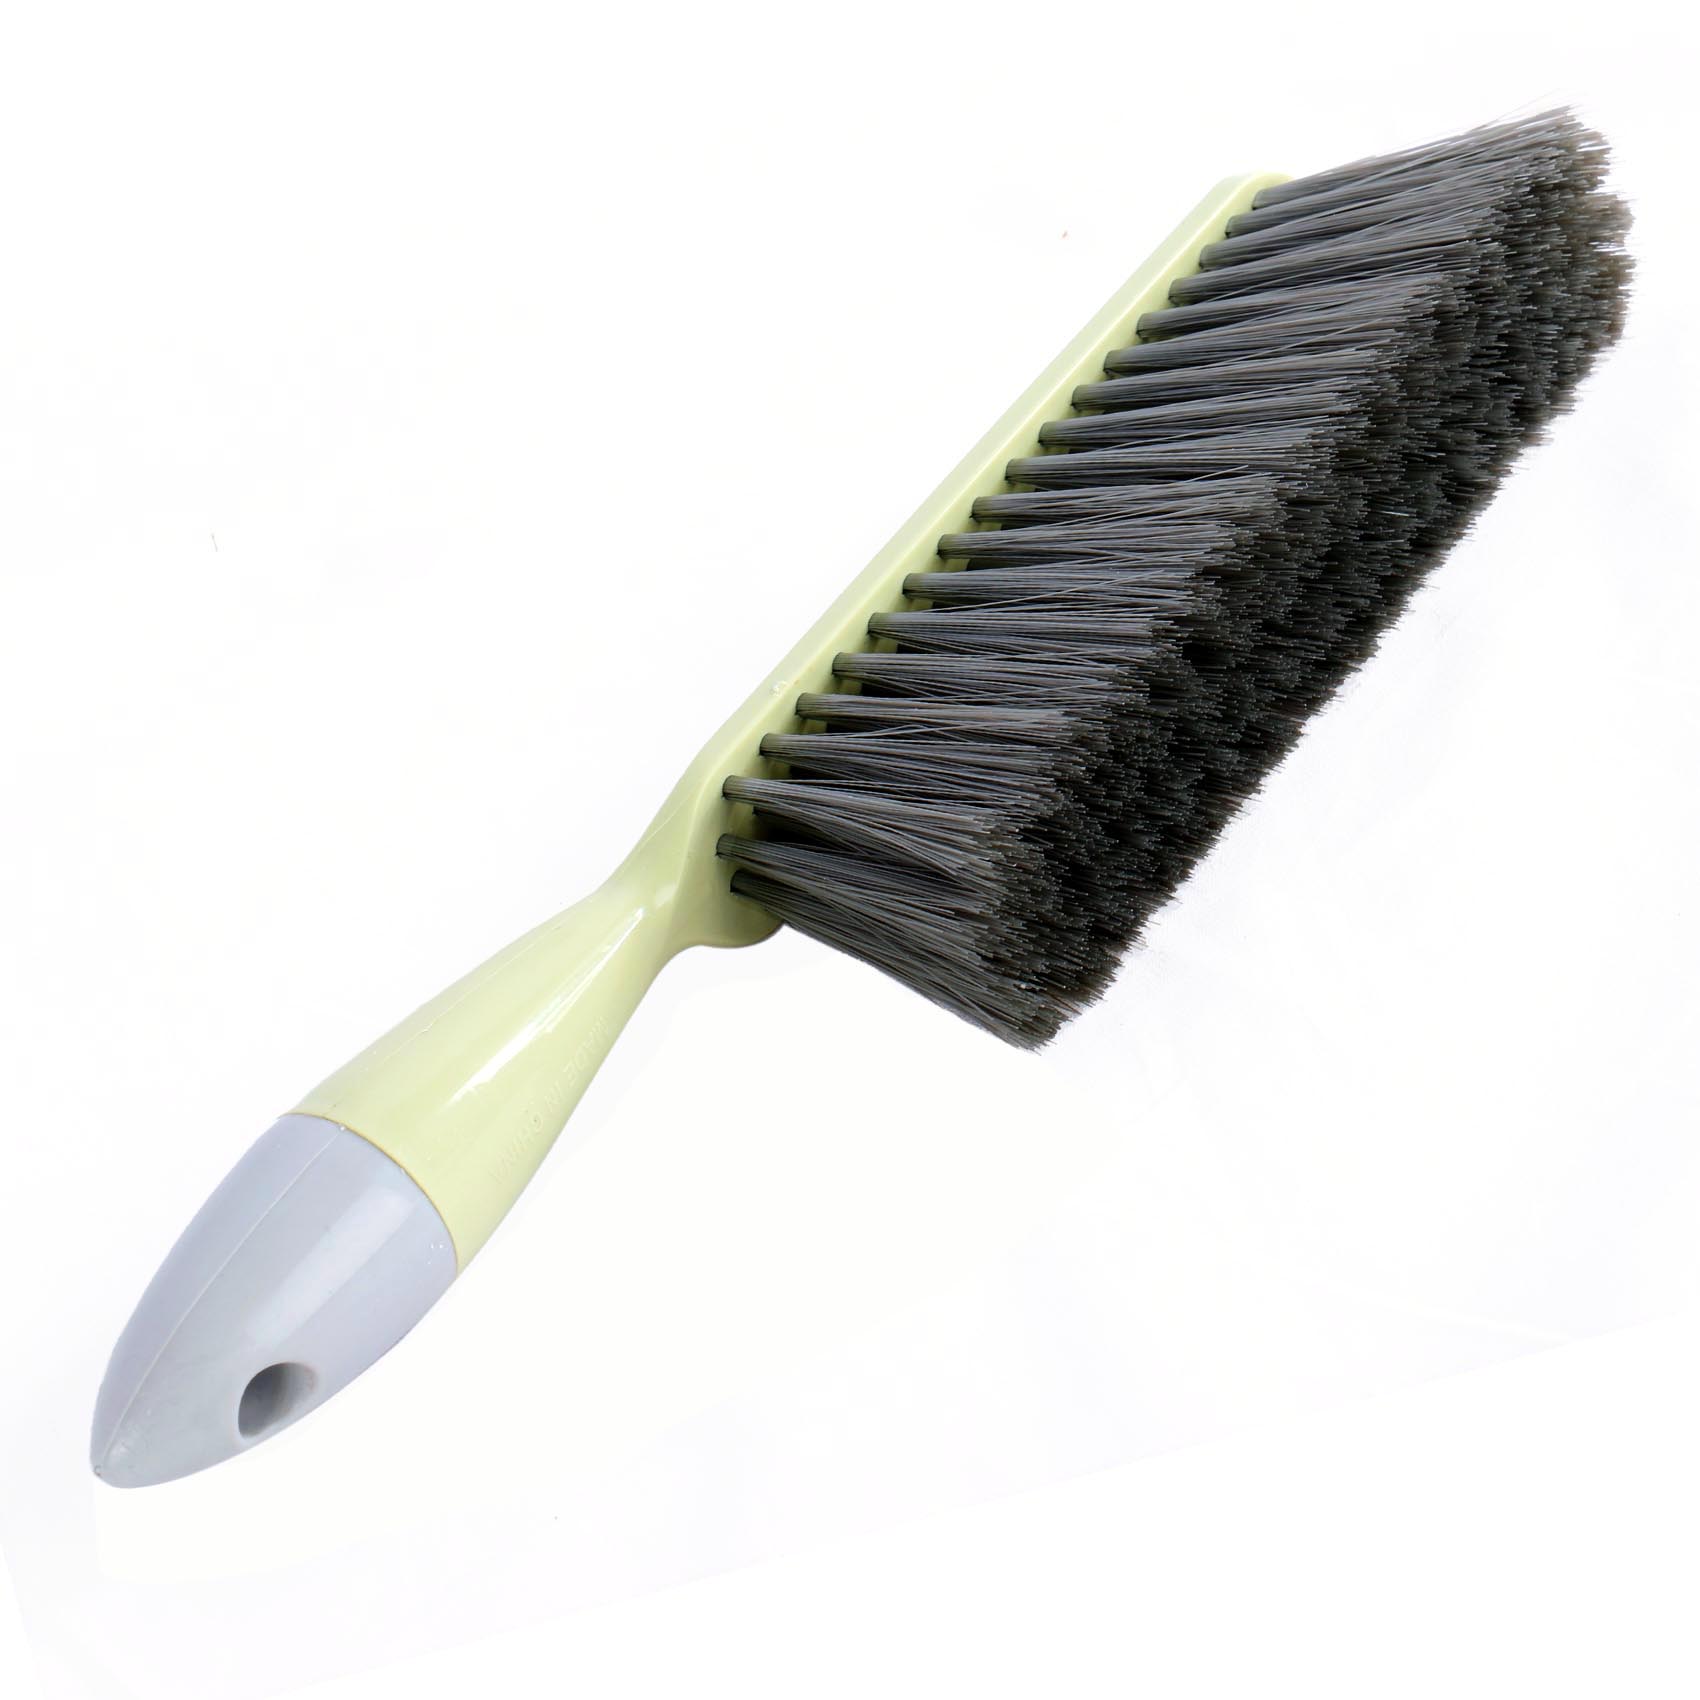 Buy Titan Soft Cleaning Brush 12 Inch Online Dubai - UAE  Misar.Ae فرشاة  تنظيف ناعمة تيتان 12 بوصة ، ألوان متعددة السطح ، ألوان متنوعة